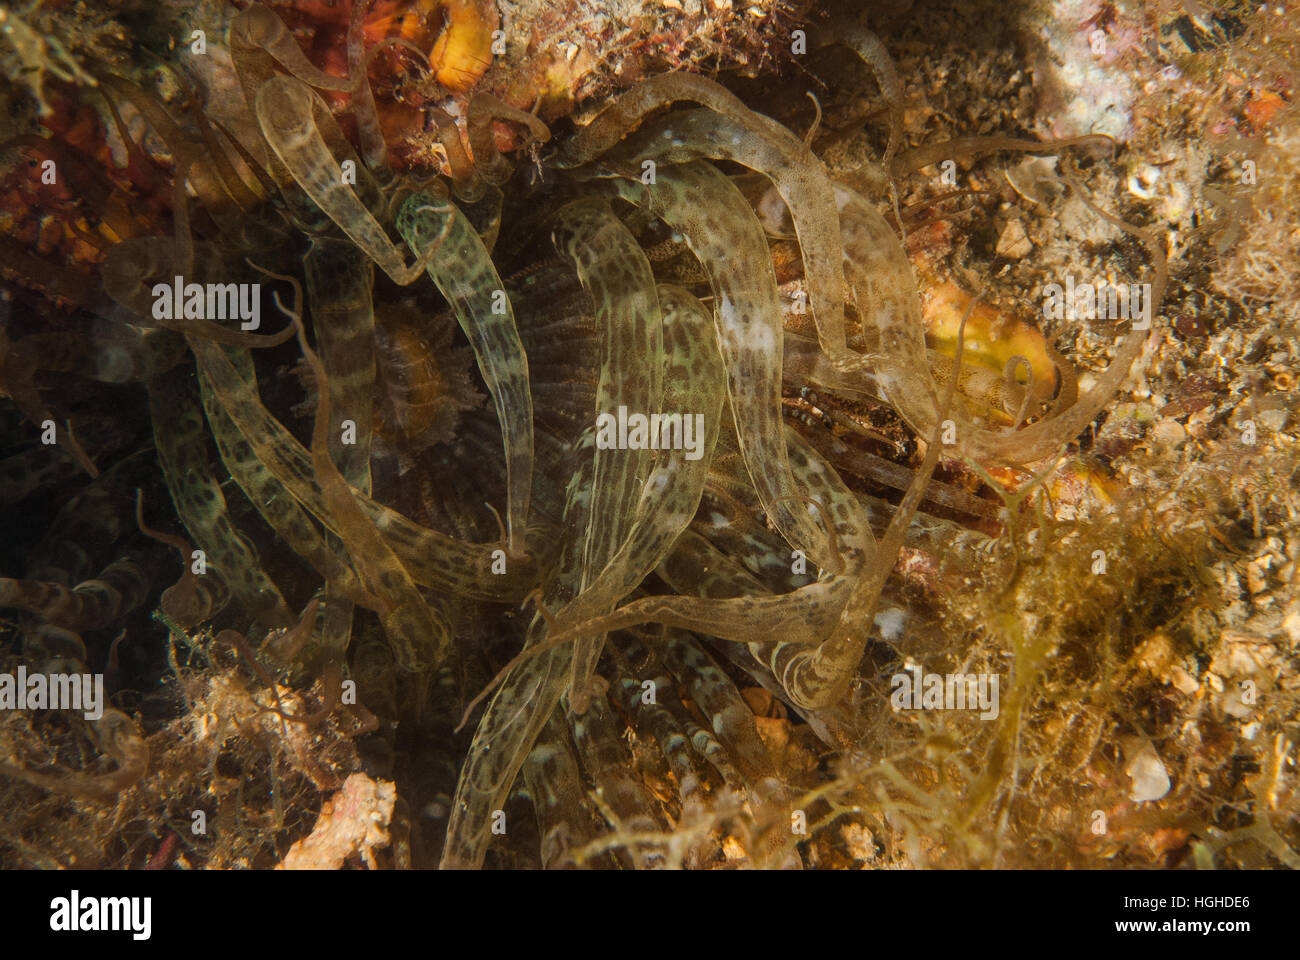 Trumpet anemone, Aiptasia mutabilis, Aiptasiidae, Tor Paterno marine protected area, Lazio, Italy, Mediterranean Sea. Stock Photo